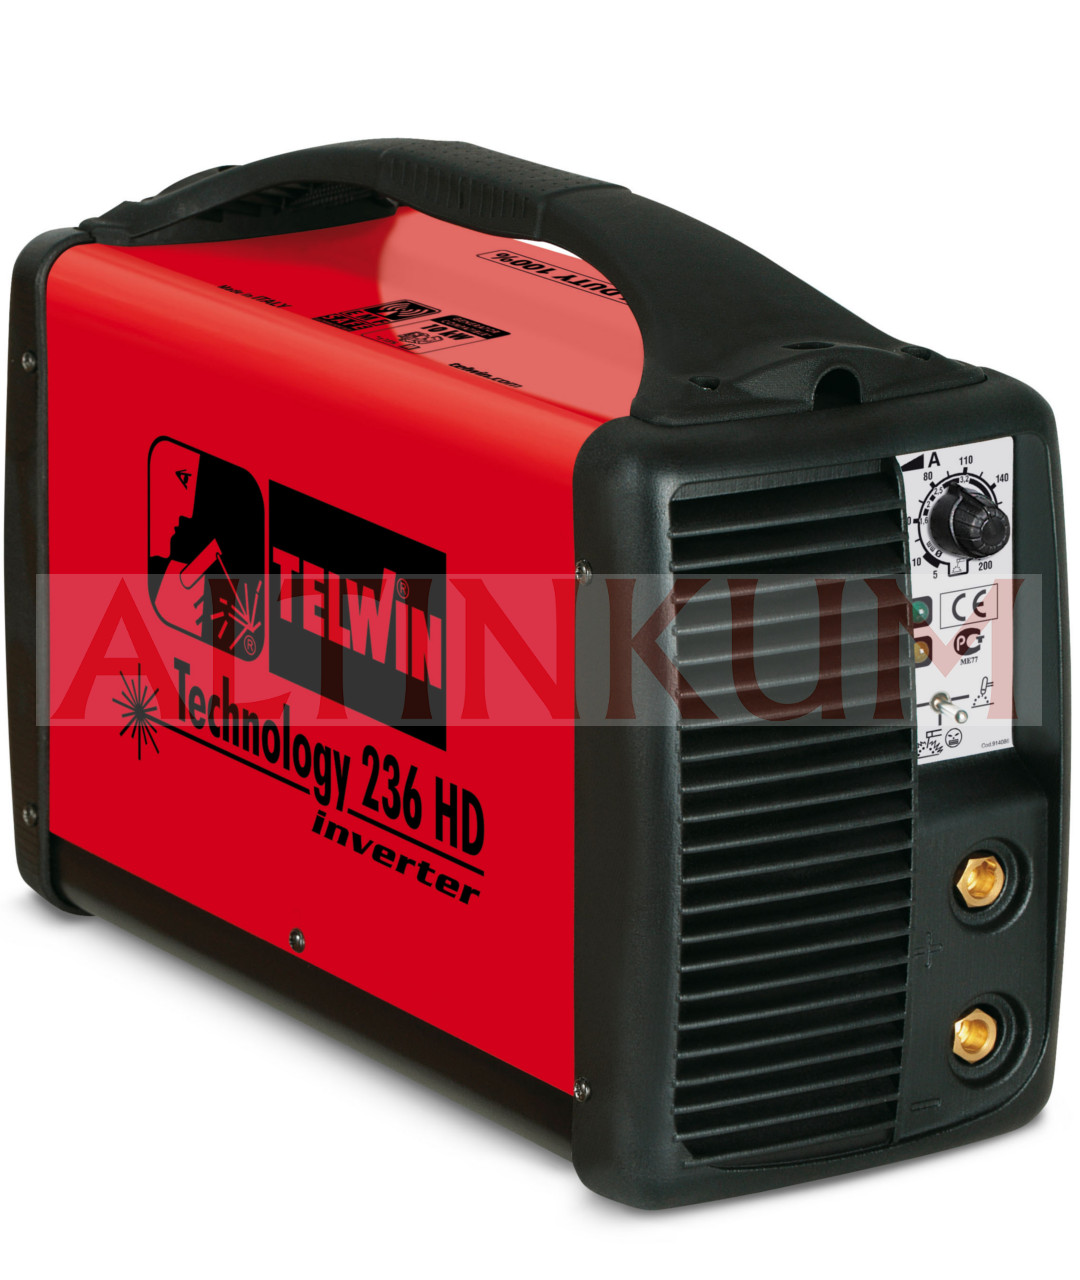 Telwin Technology 236 HD İnverter Kaynak Makinası 200 Amper